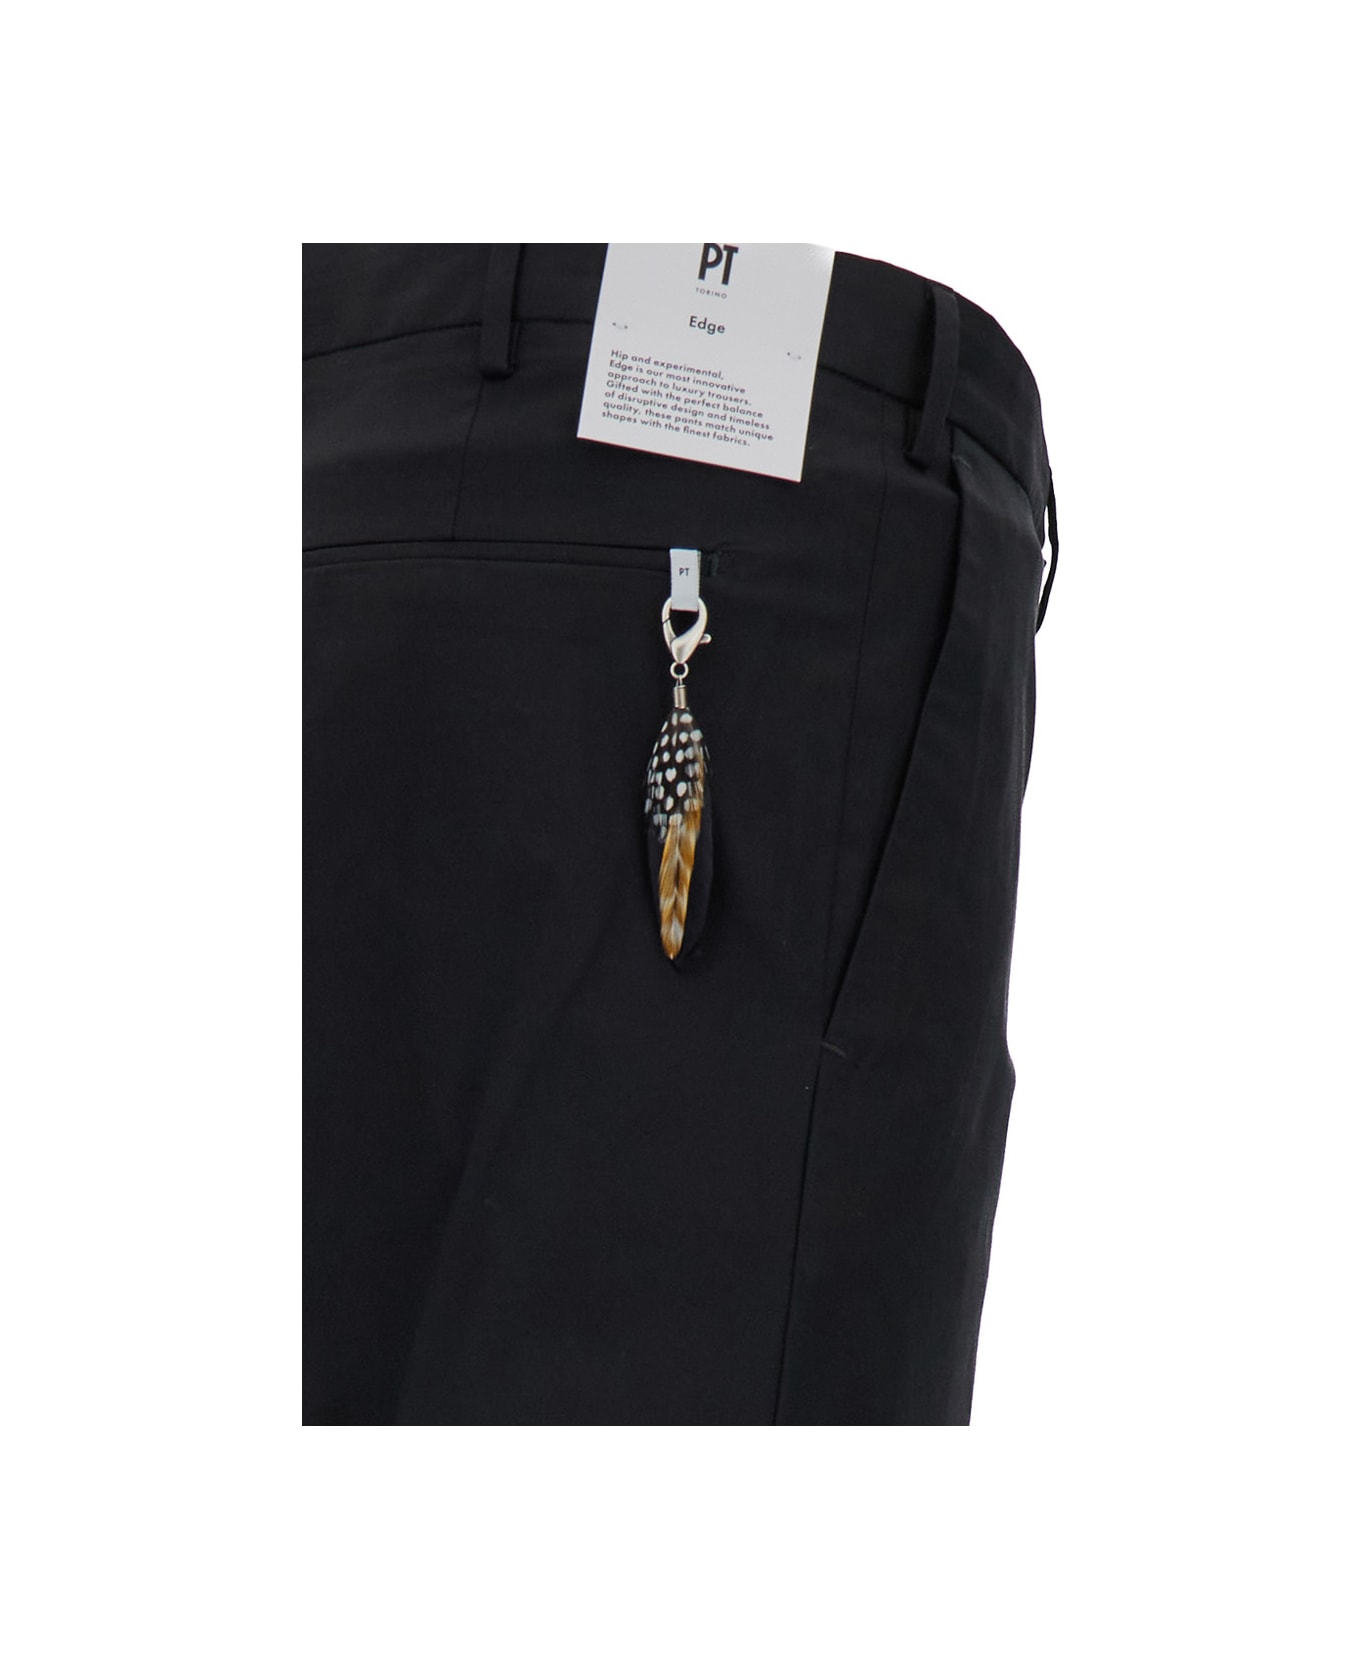 PT01 Black Slim Cut Tailored Trousers In Cotton Blend Man - Black